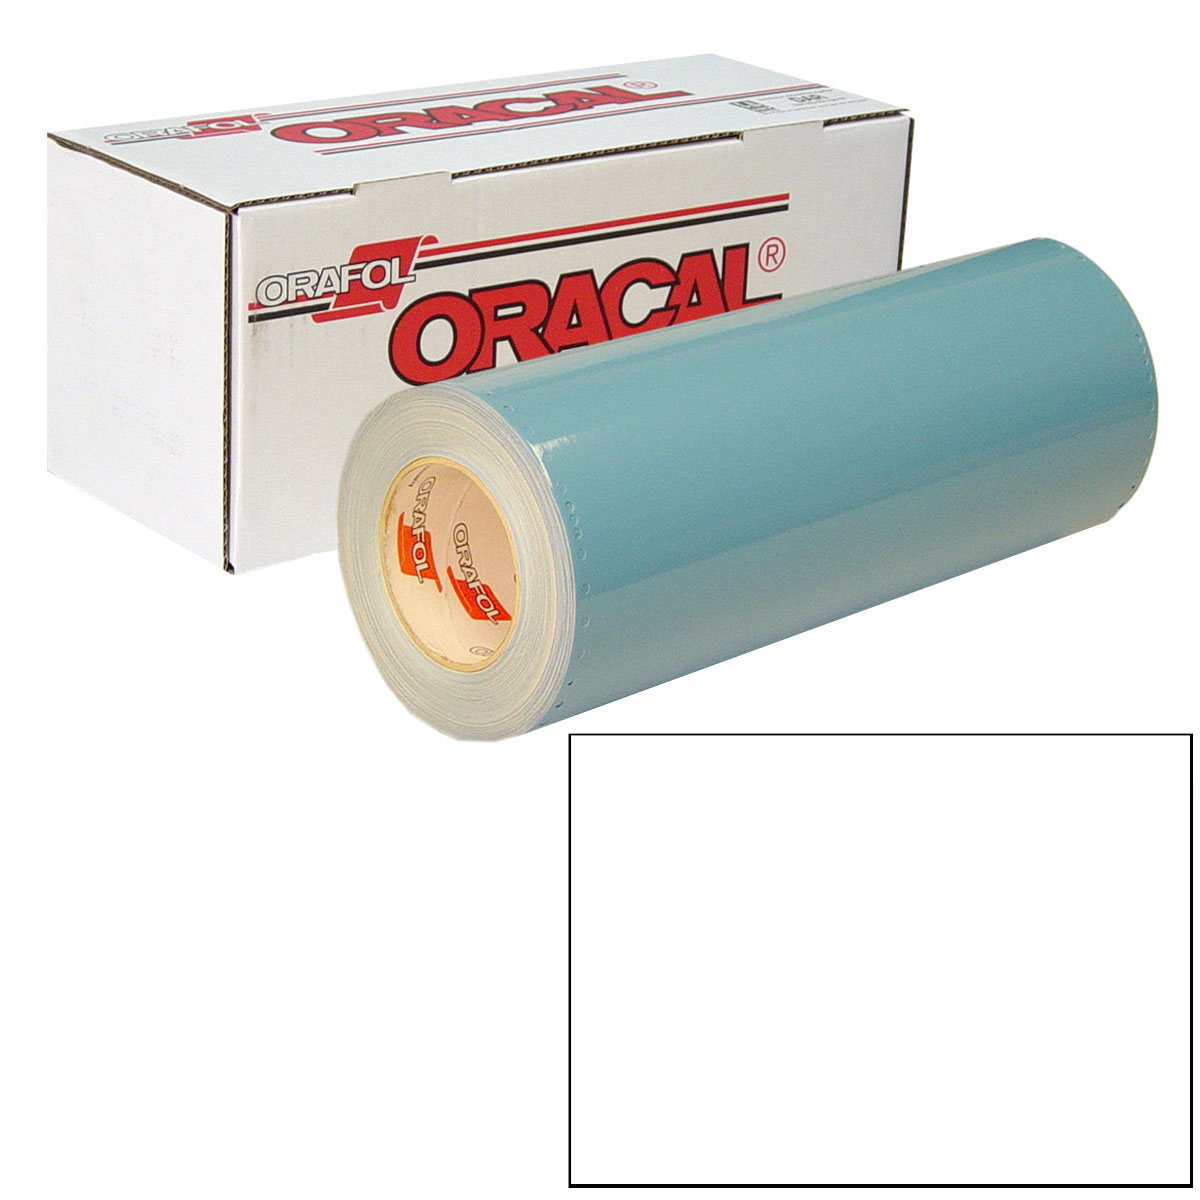 Oracal 751 & 751RA 24-inch